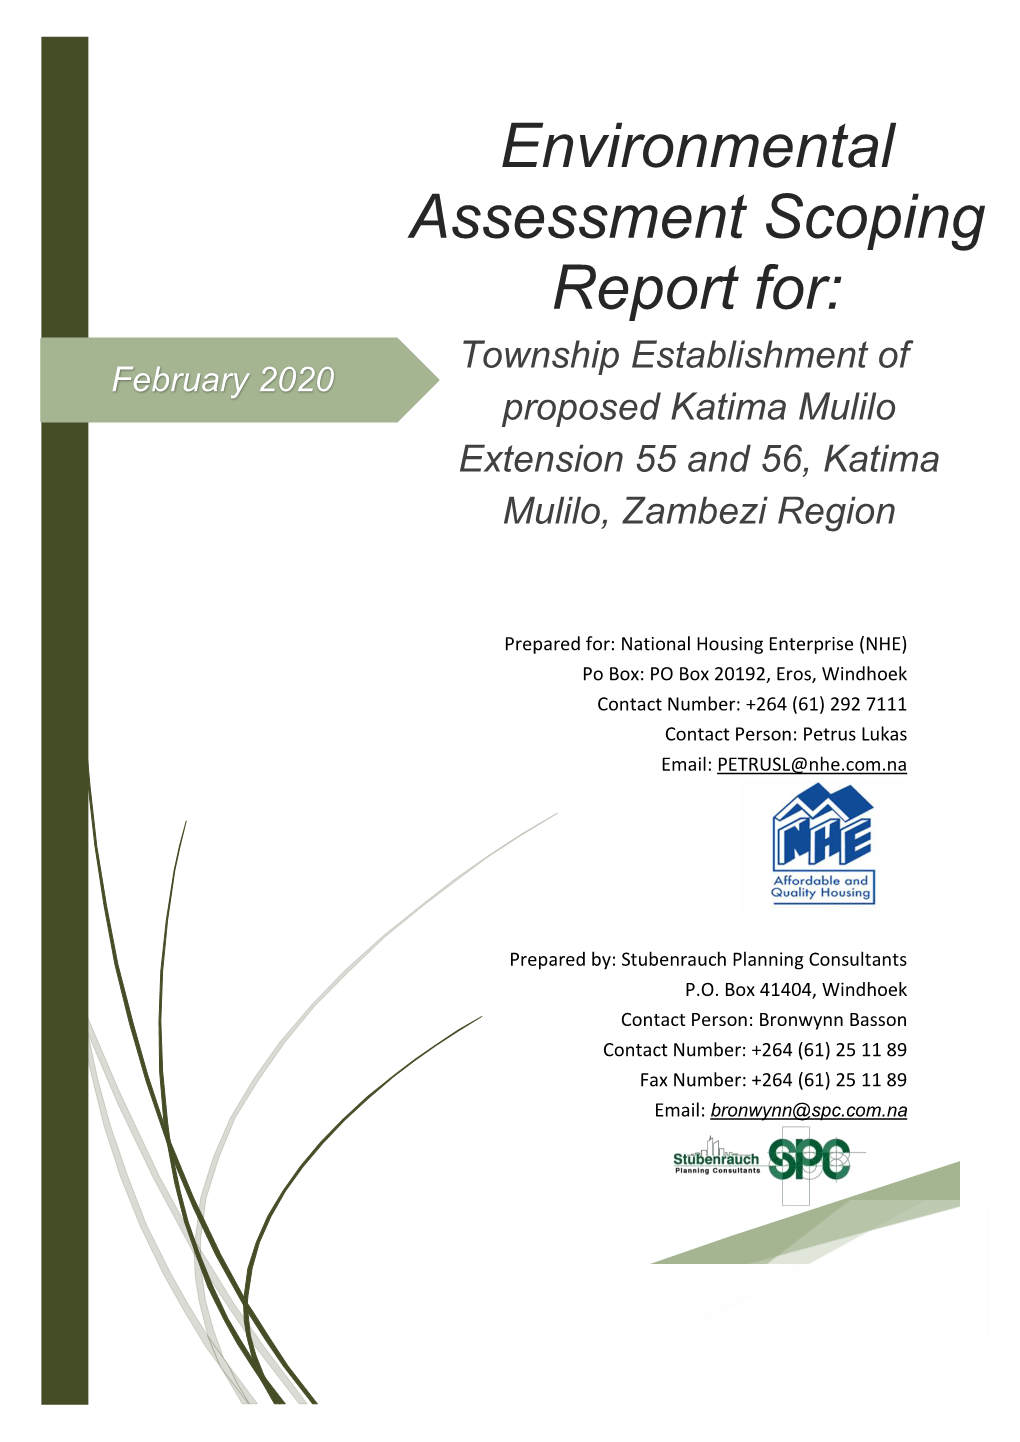 Environmental Assessment Scoping Report For: Township Establishment of February 2020 Proposed Katima Mulilo Extension 55 and 56, Katima Mulilo, Zambezi Region